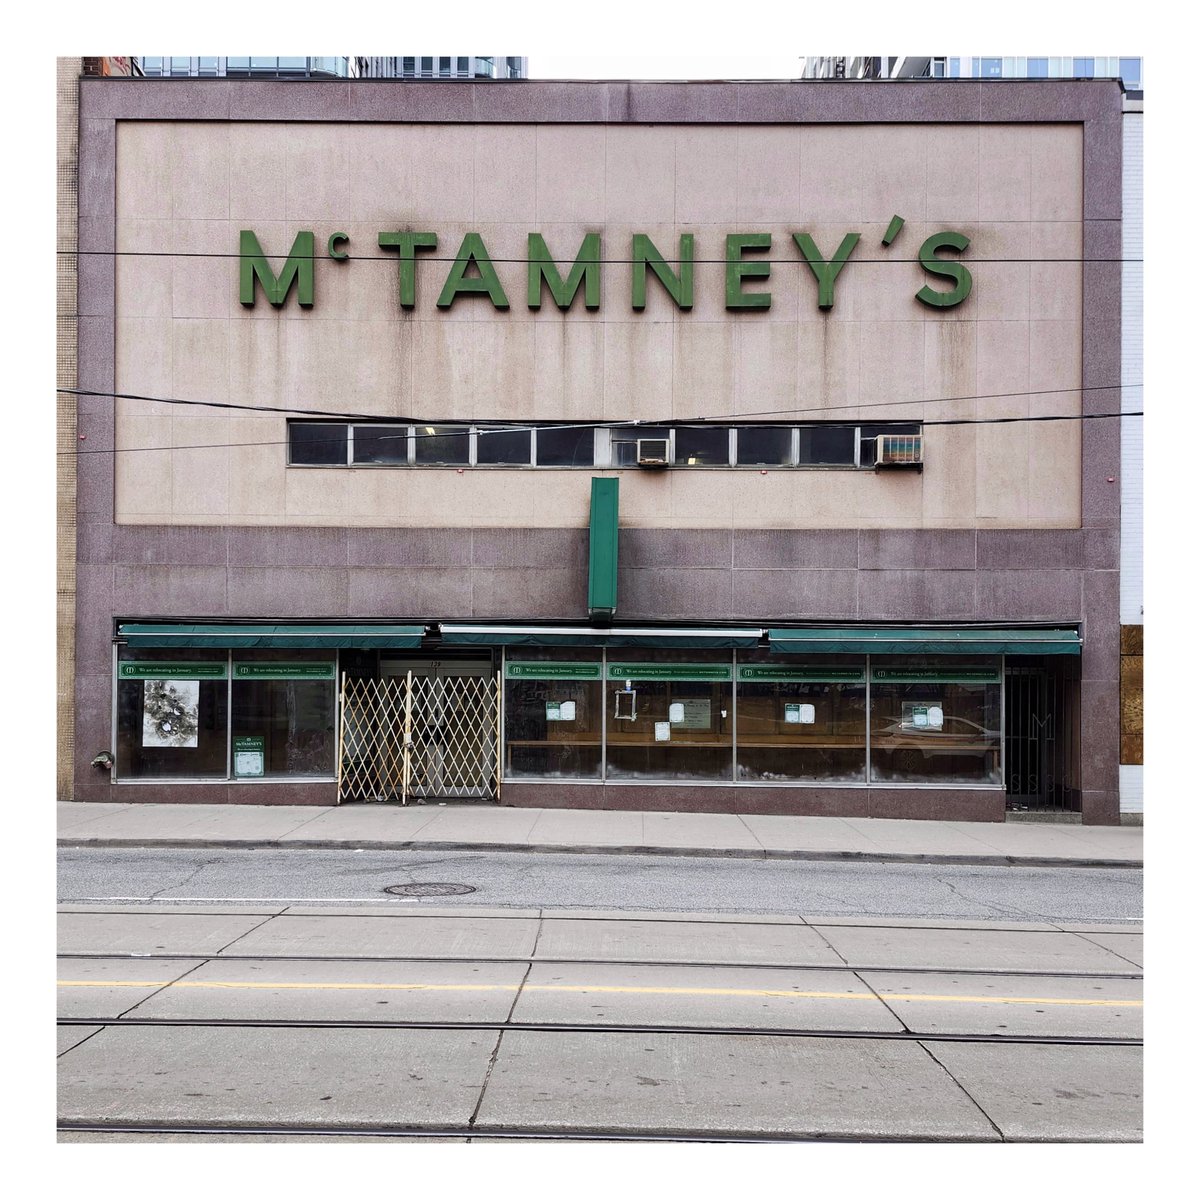 McTAMNEY'S. #Toronto #ChurchStreet #McTamneys #PawnShop #Pawnbrokers #Signage #Photography